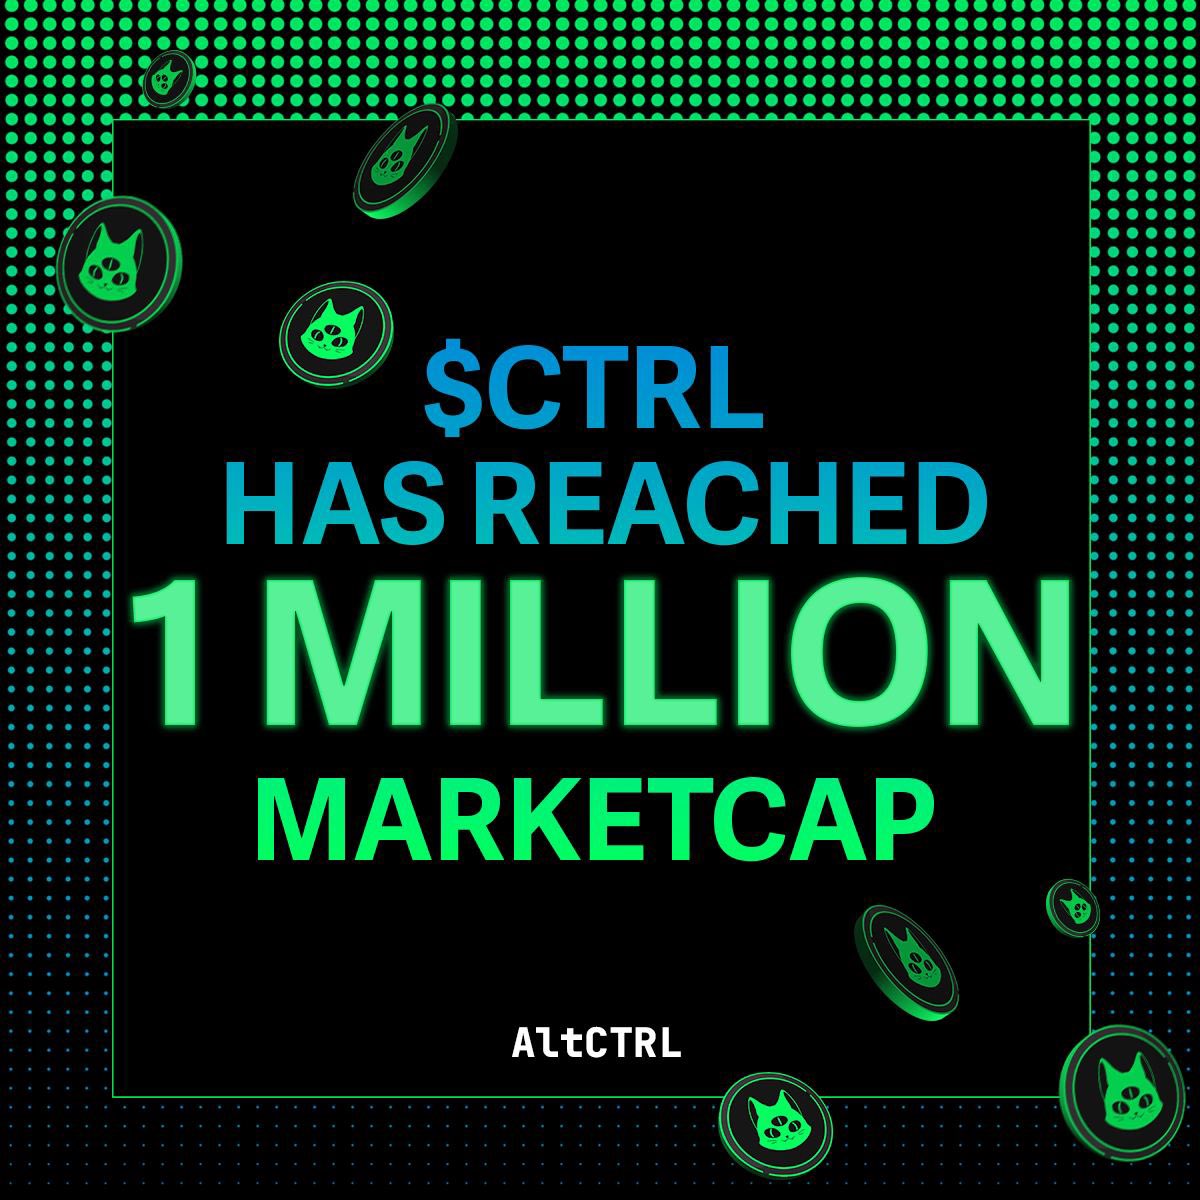 Congratulations cryptonauts! #altctrl #CTRL